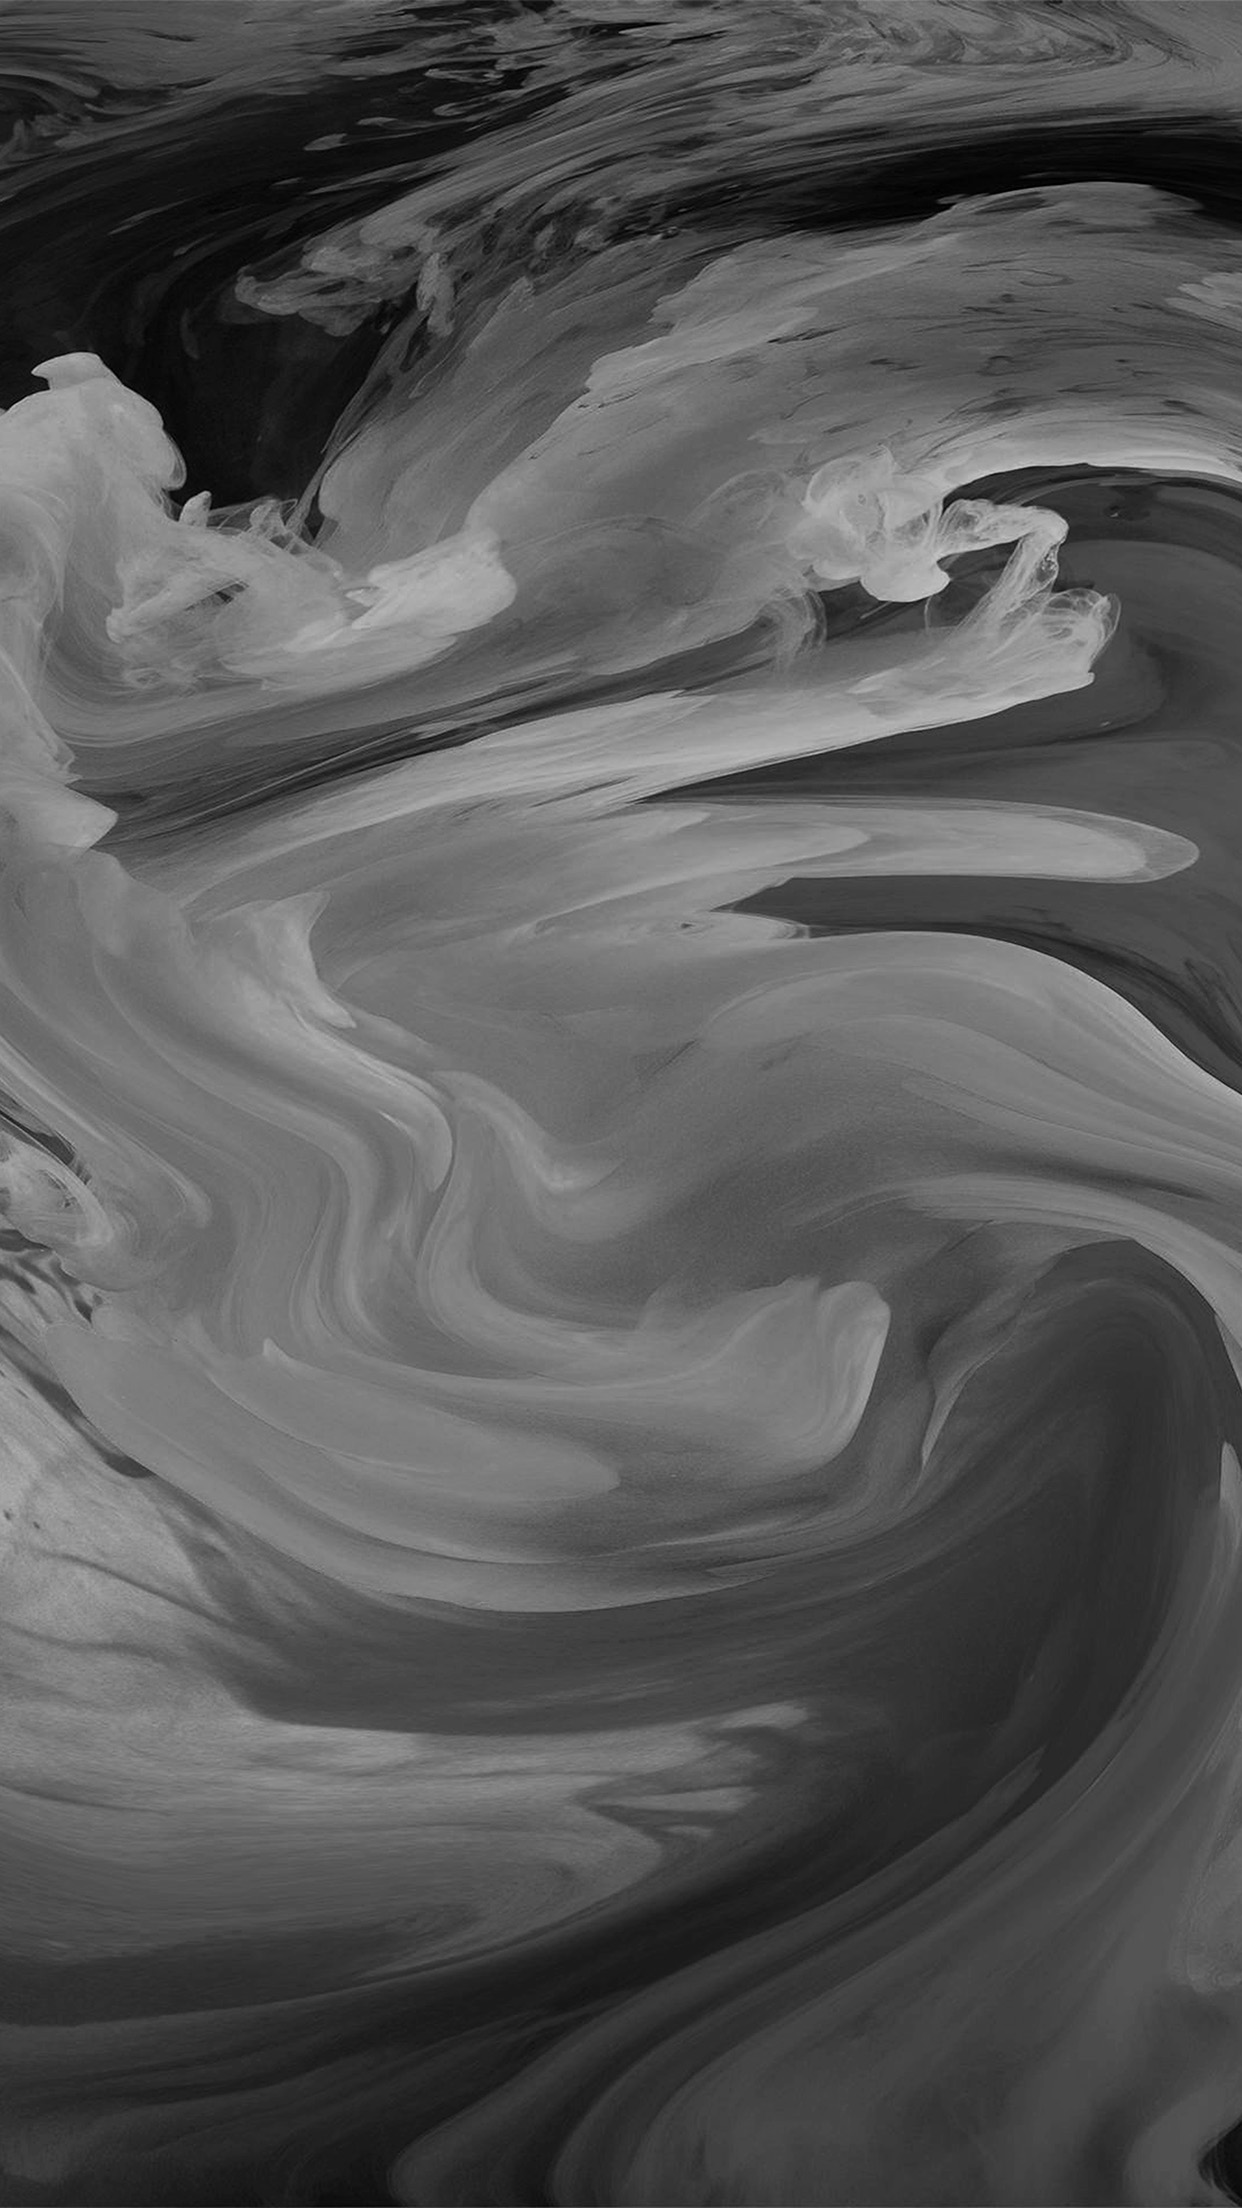 iPhone X wallpaper. hurricane swirl abstract art paint dark bw pattern